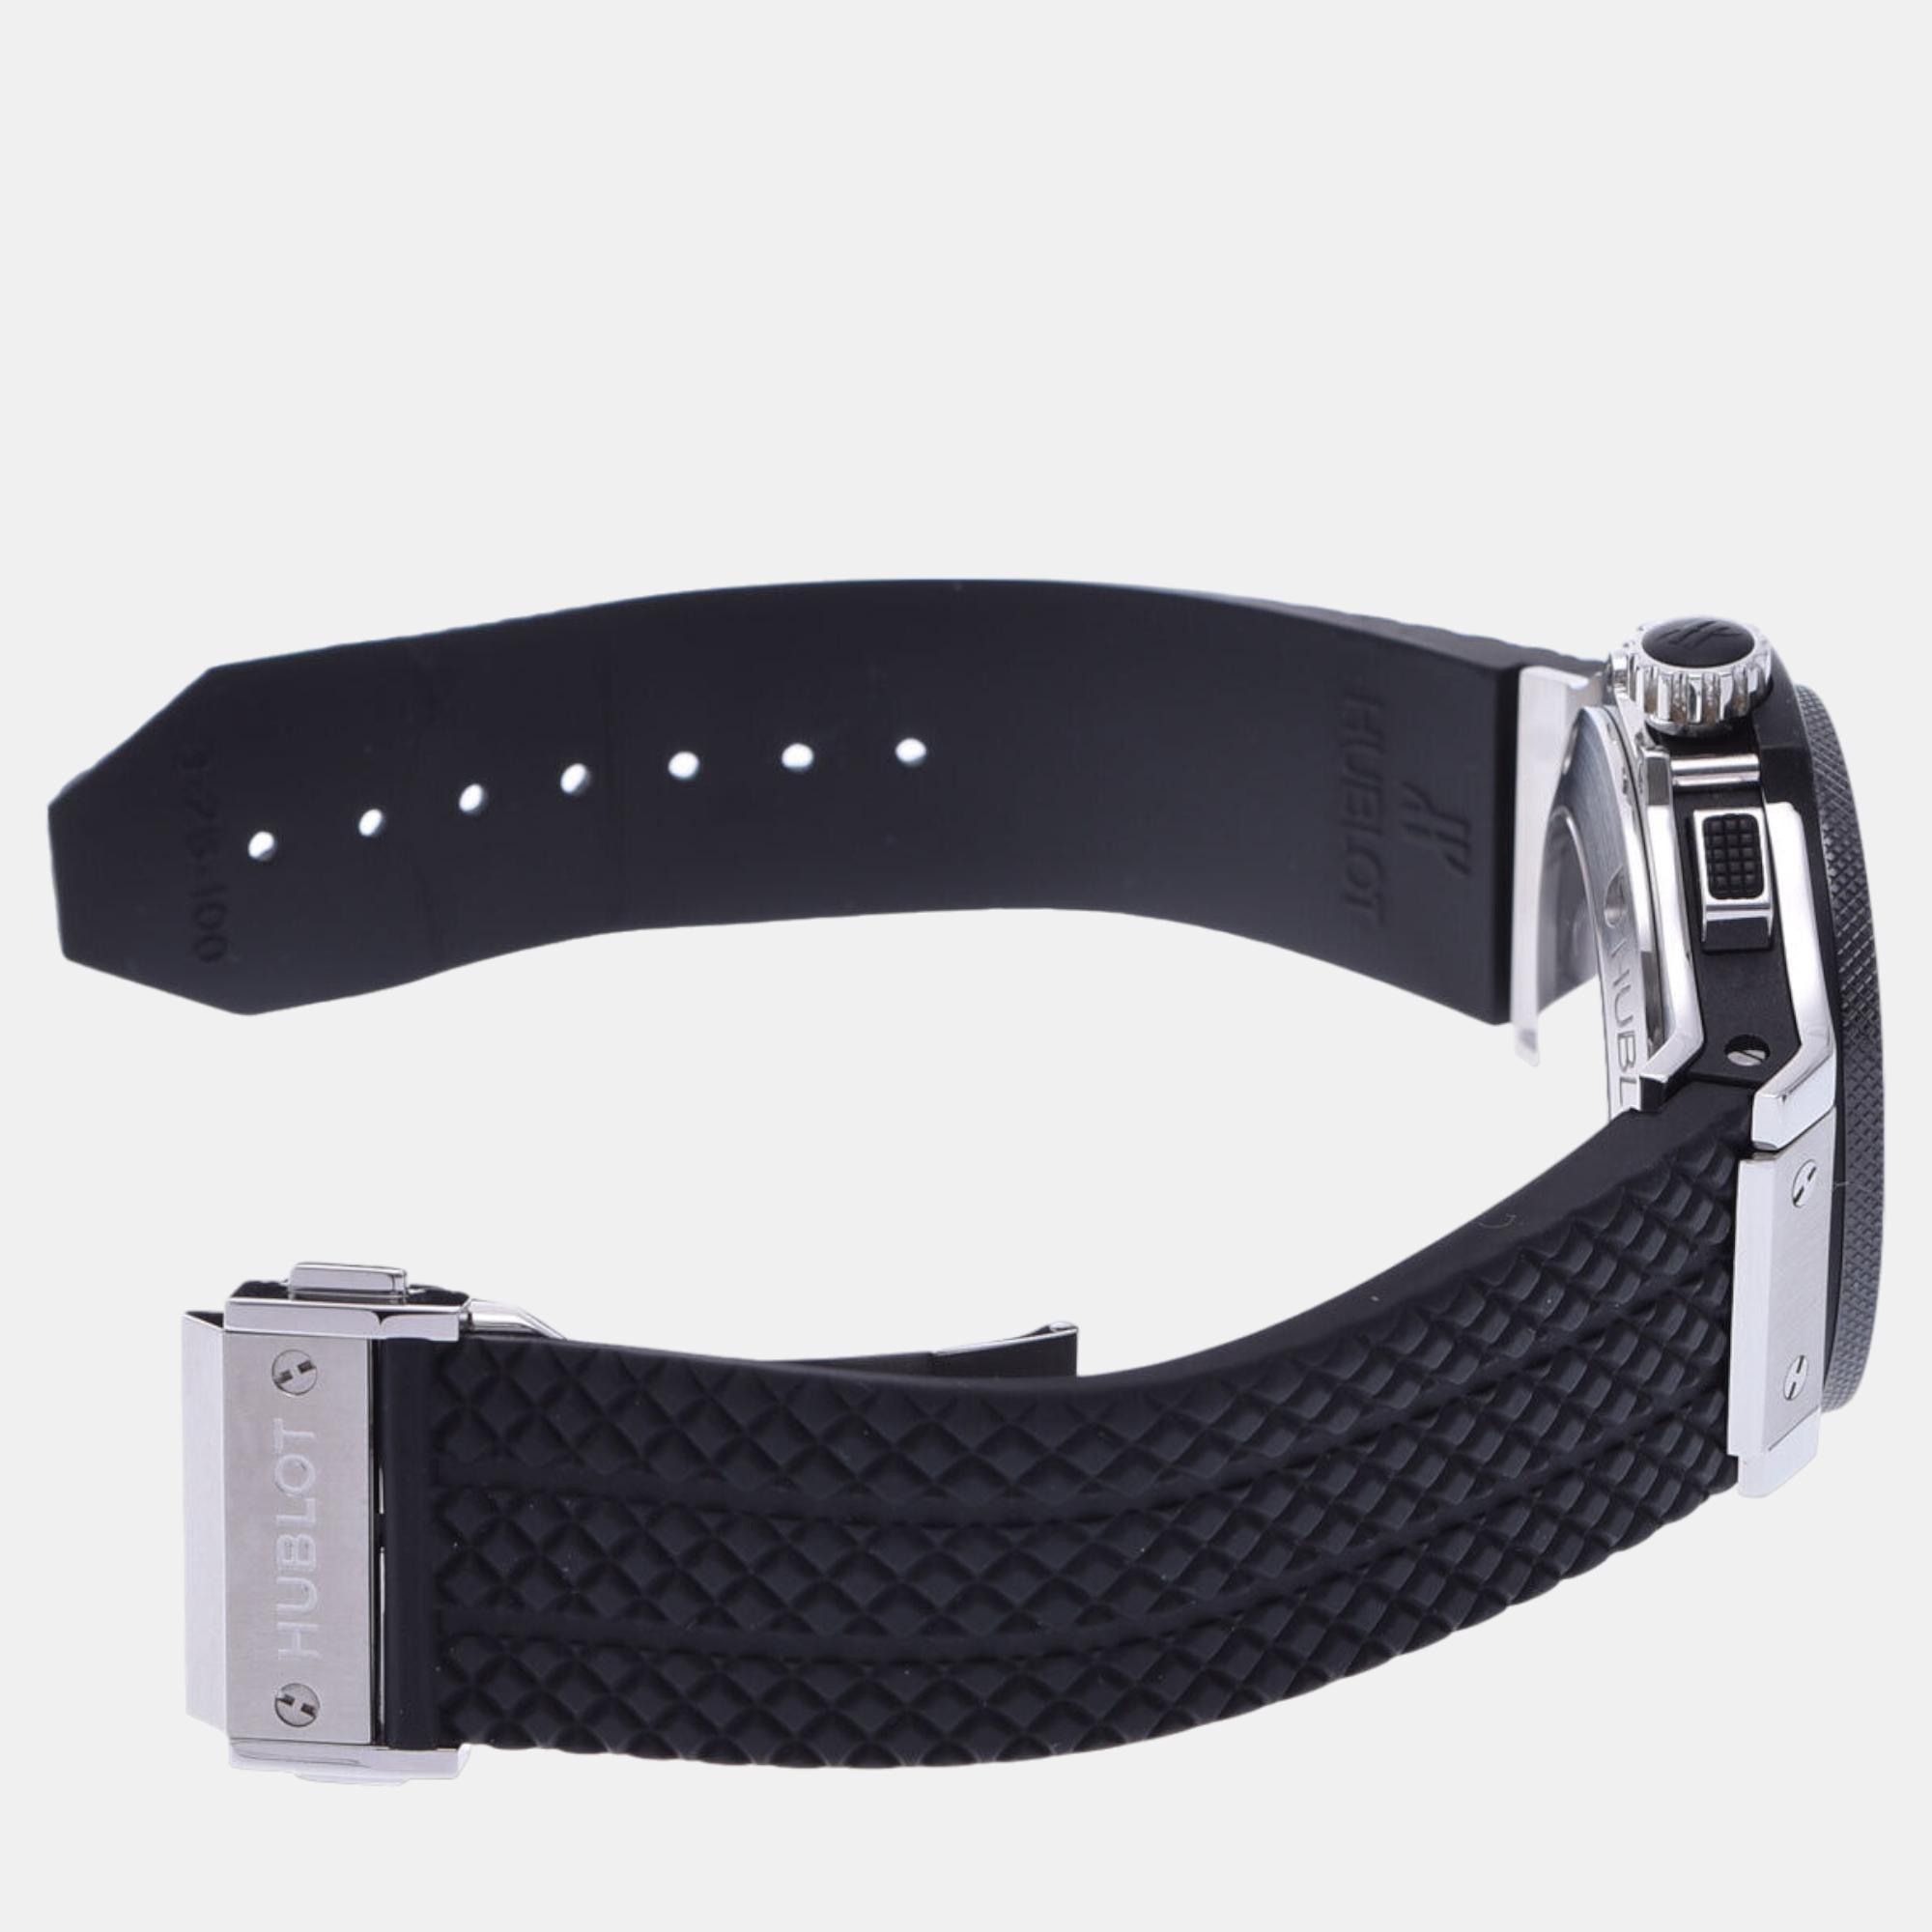 Hublot Black Stainless Steel Big Bang 301.SB.131.RX Automatic Men's Wristwatch 44 Mm